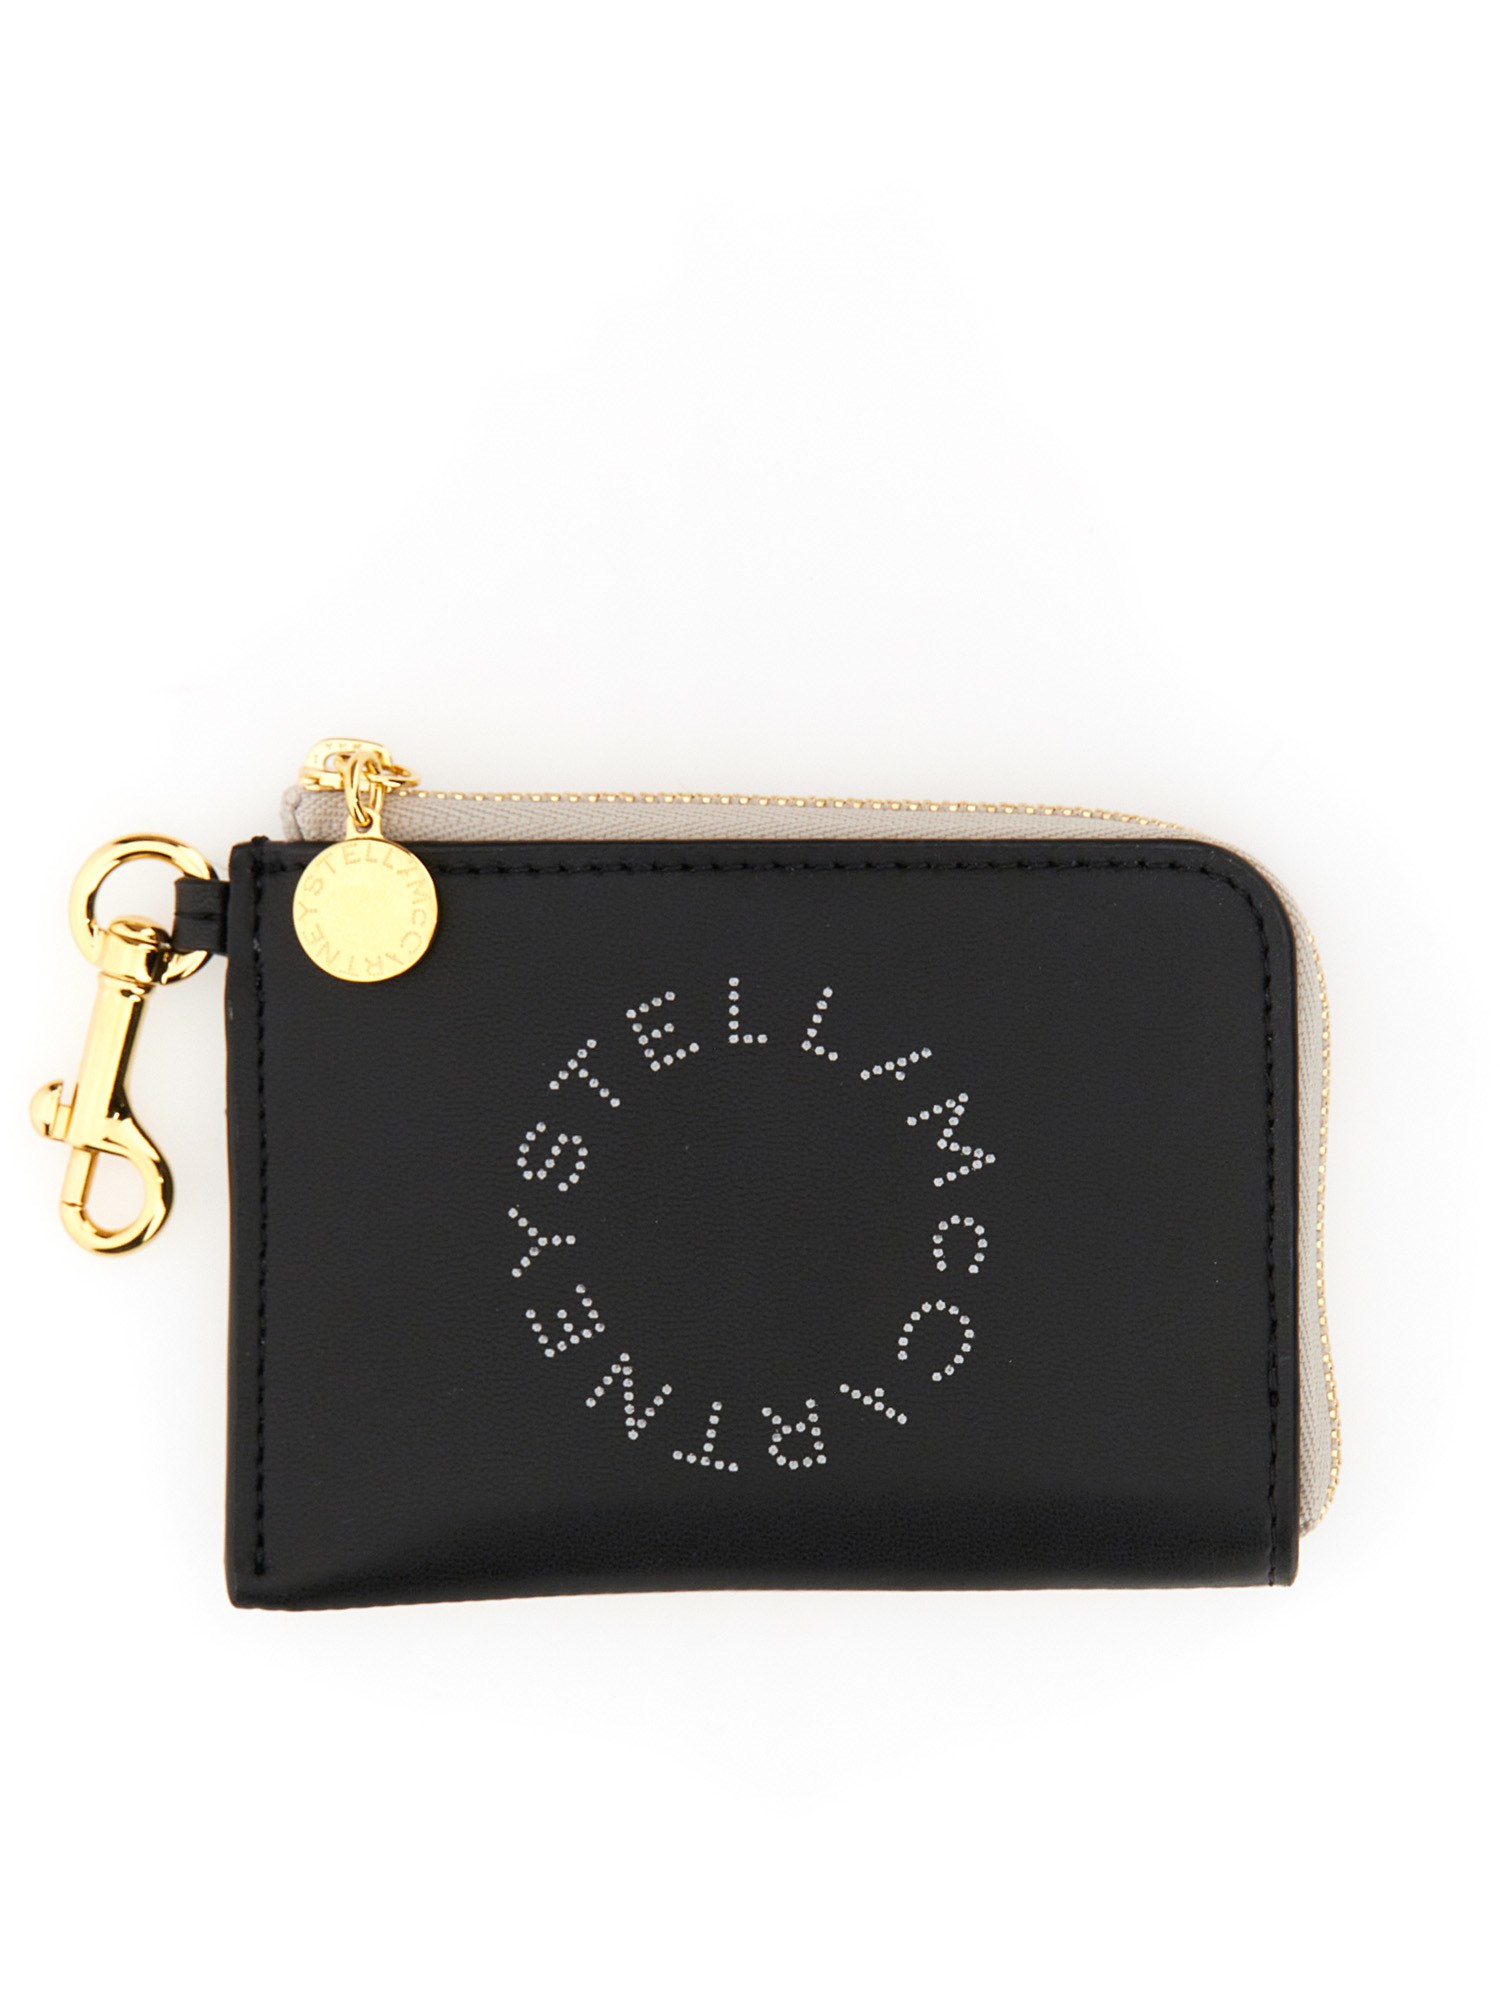 stella mccartney wallet with logo